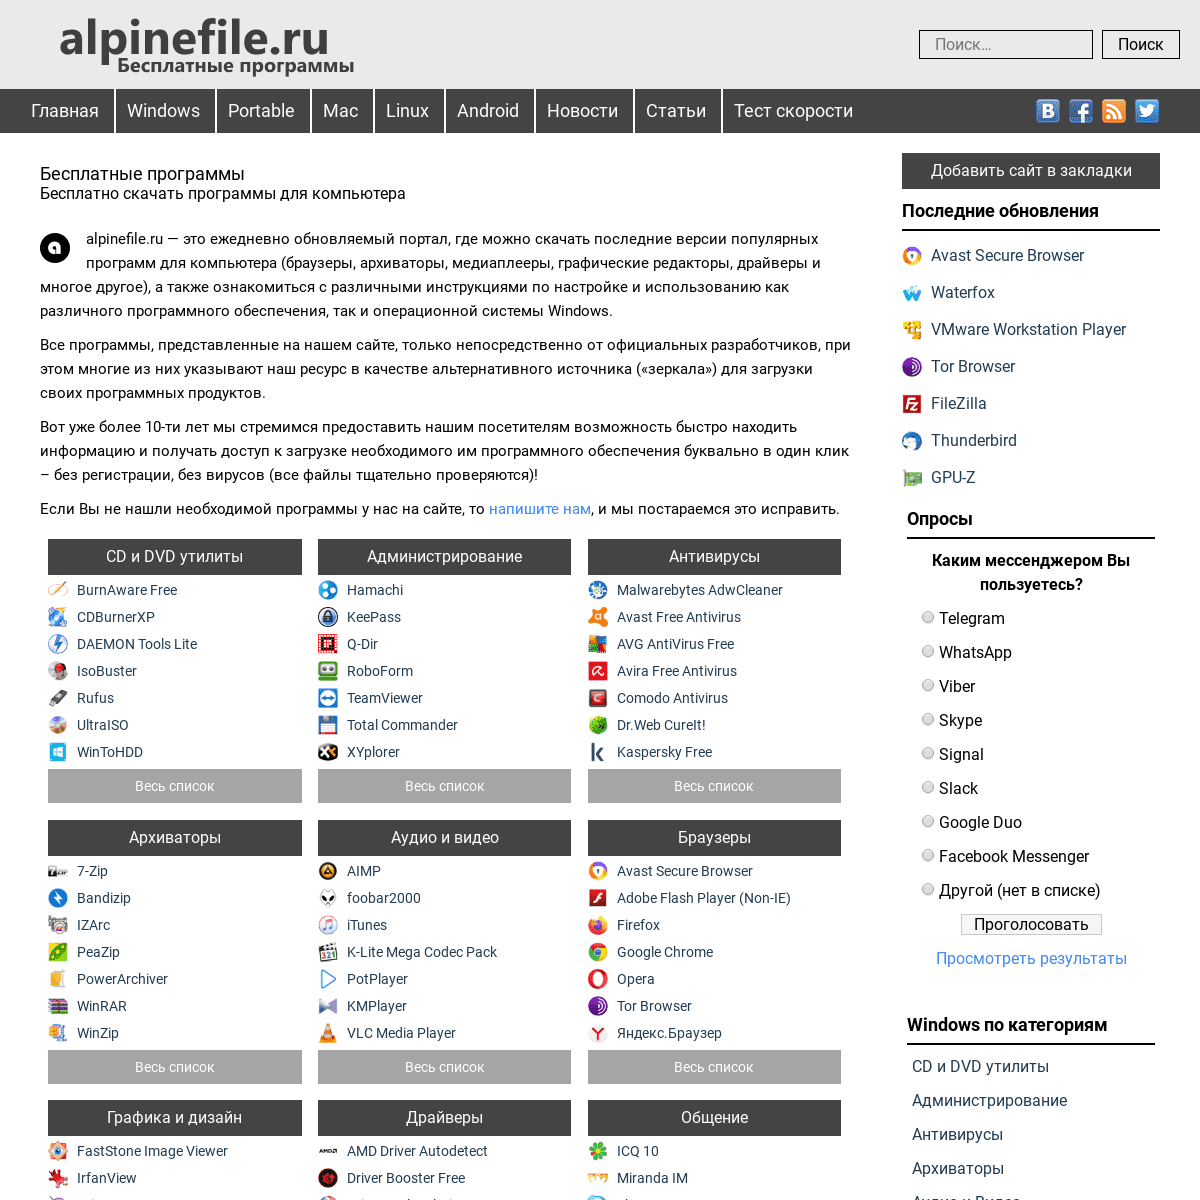 A complete backup of alpinefile.ru